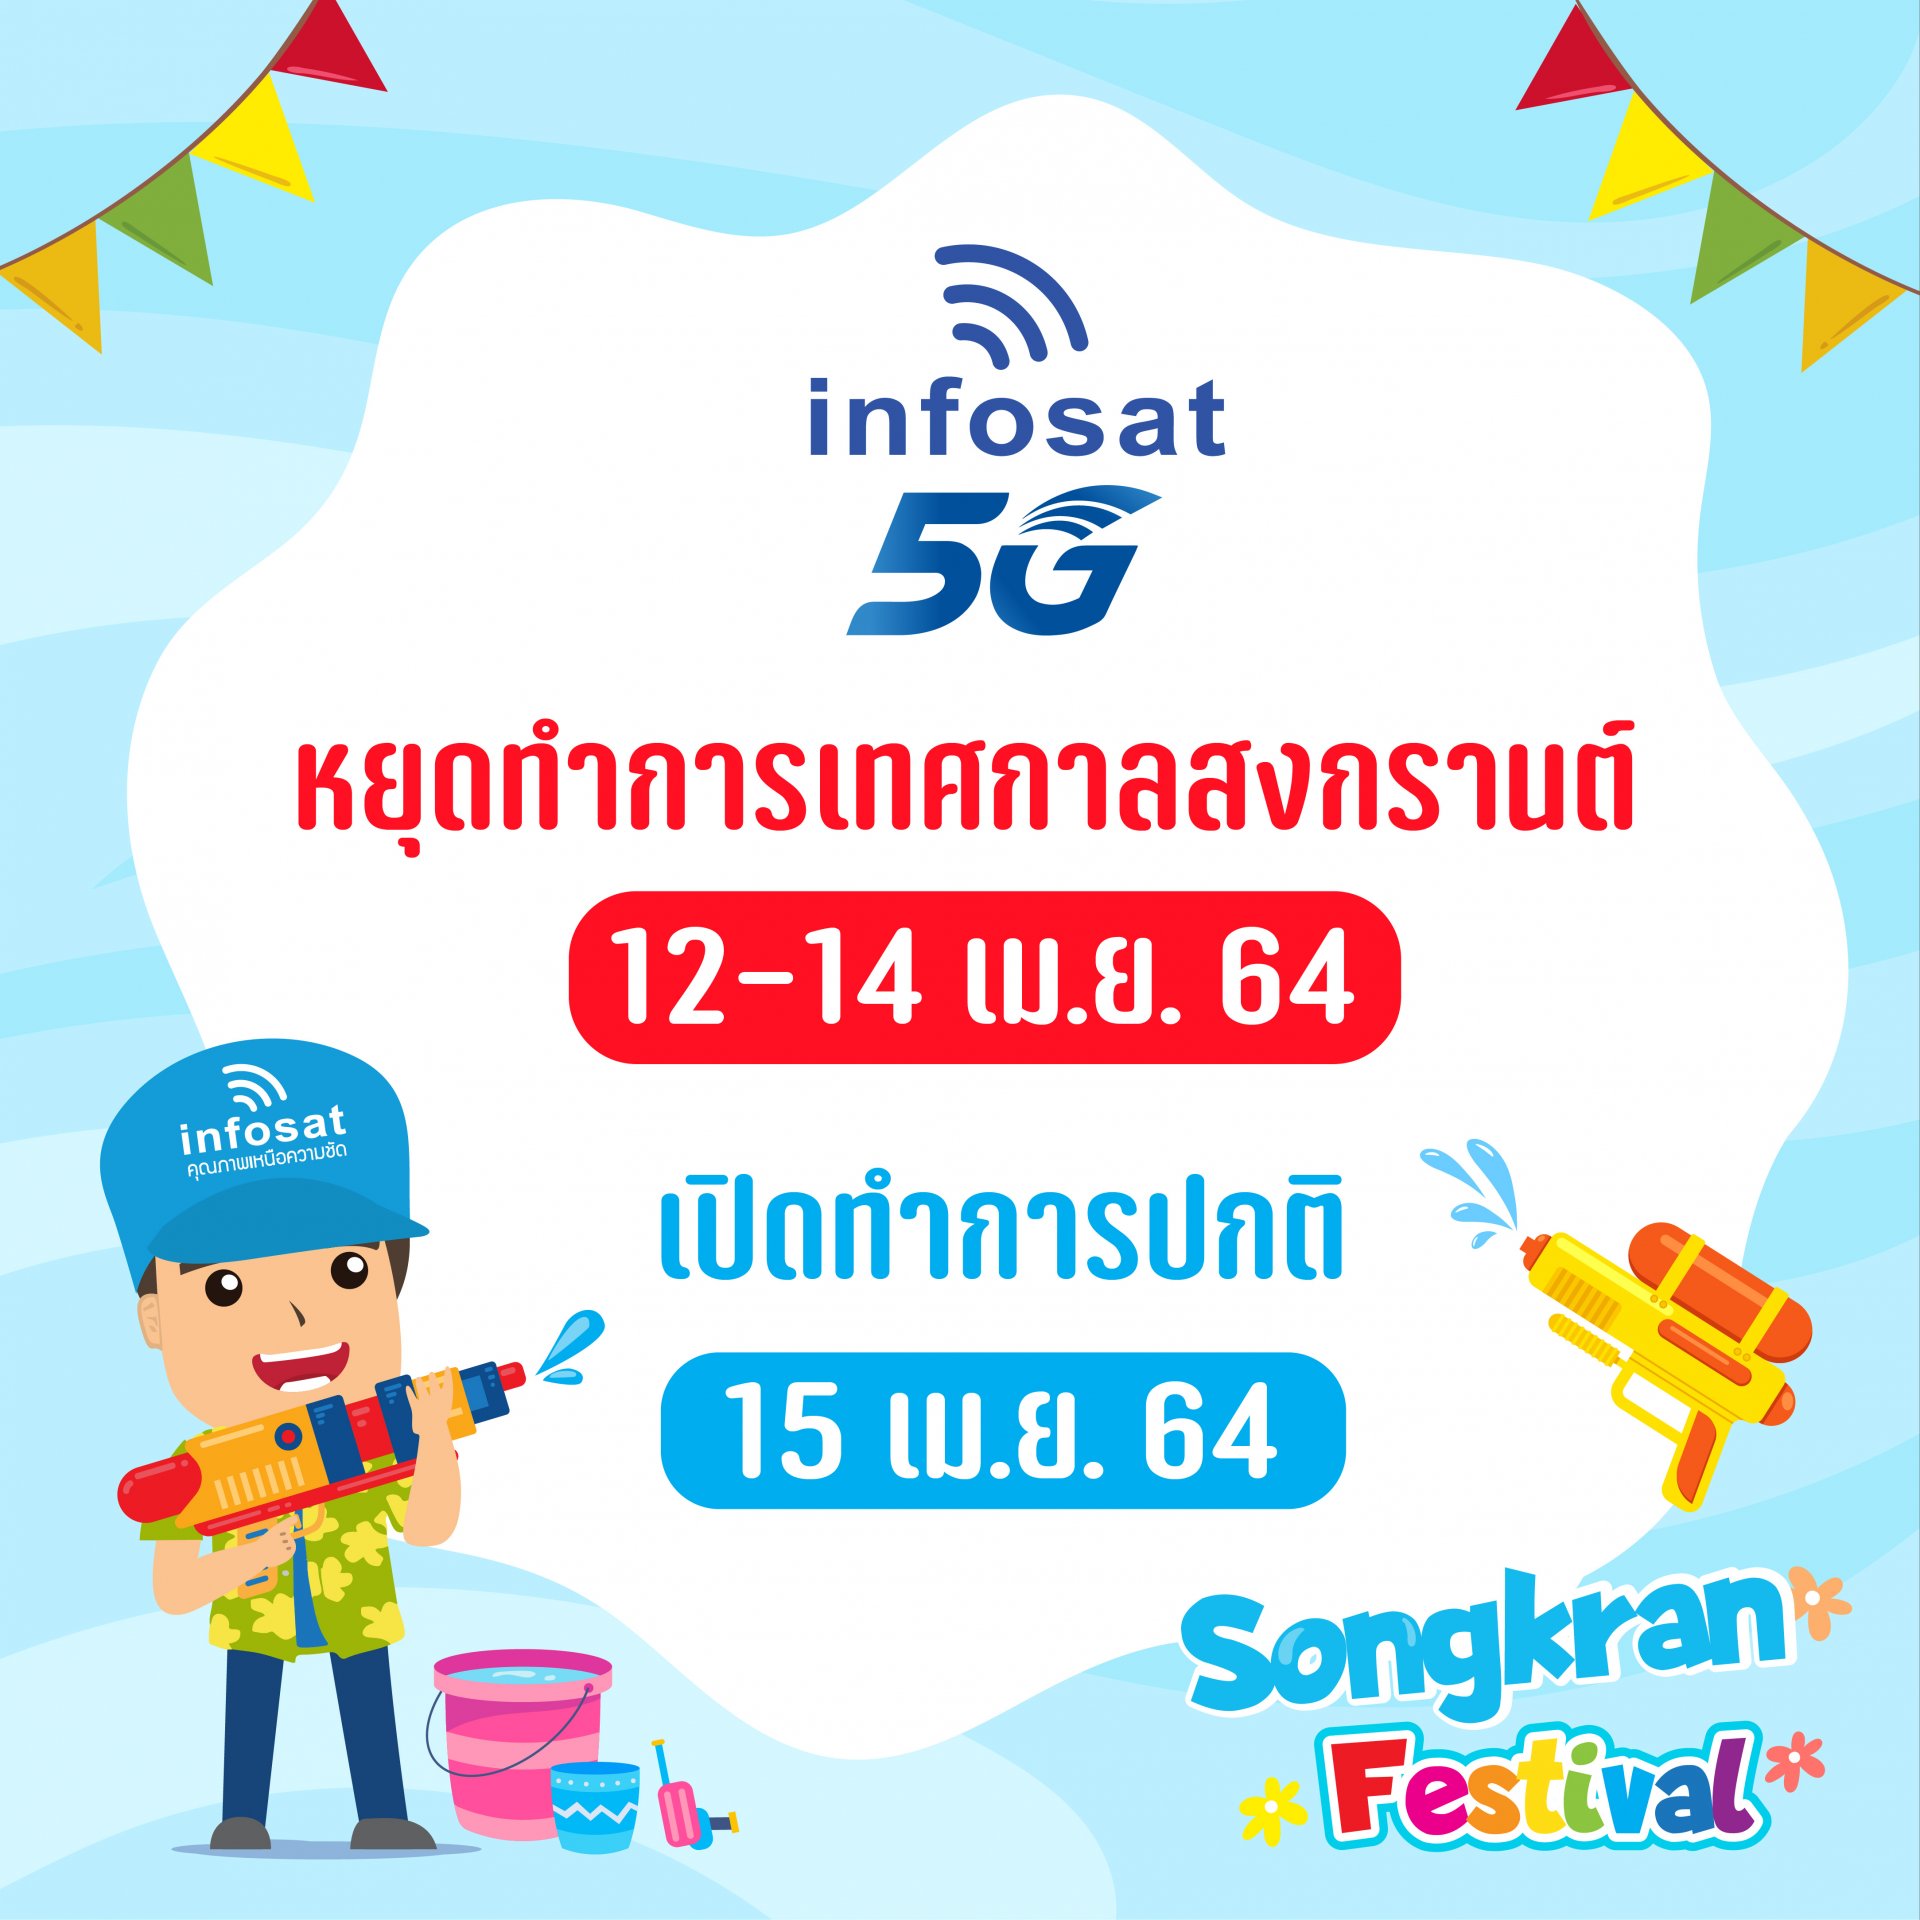 Songkran Holiday for 2021